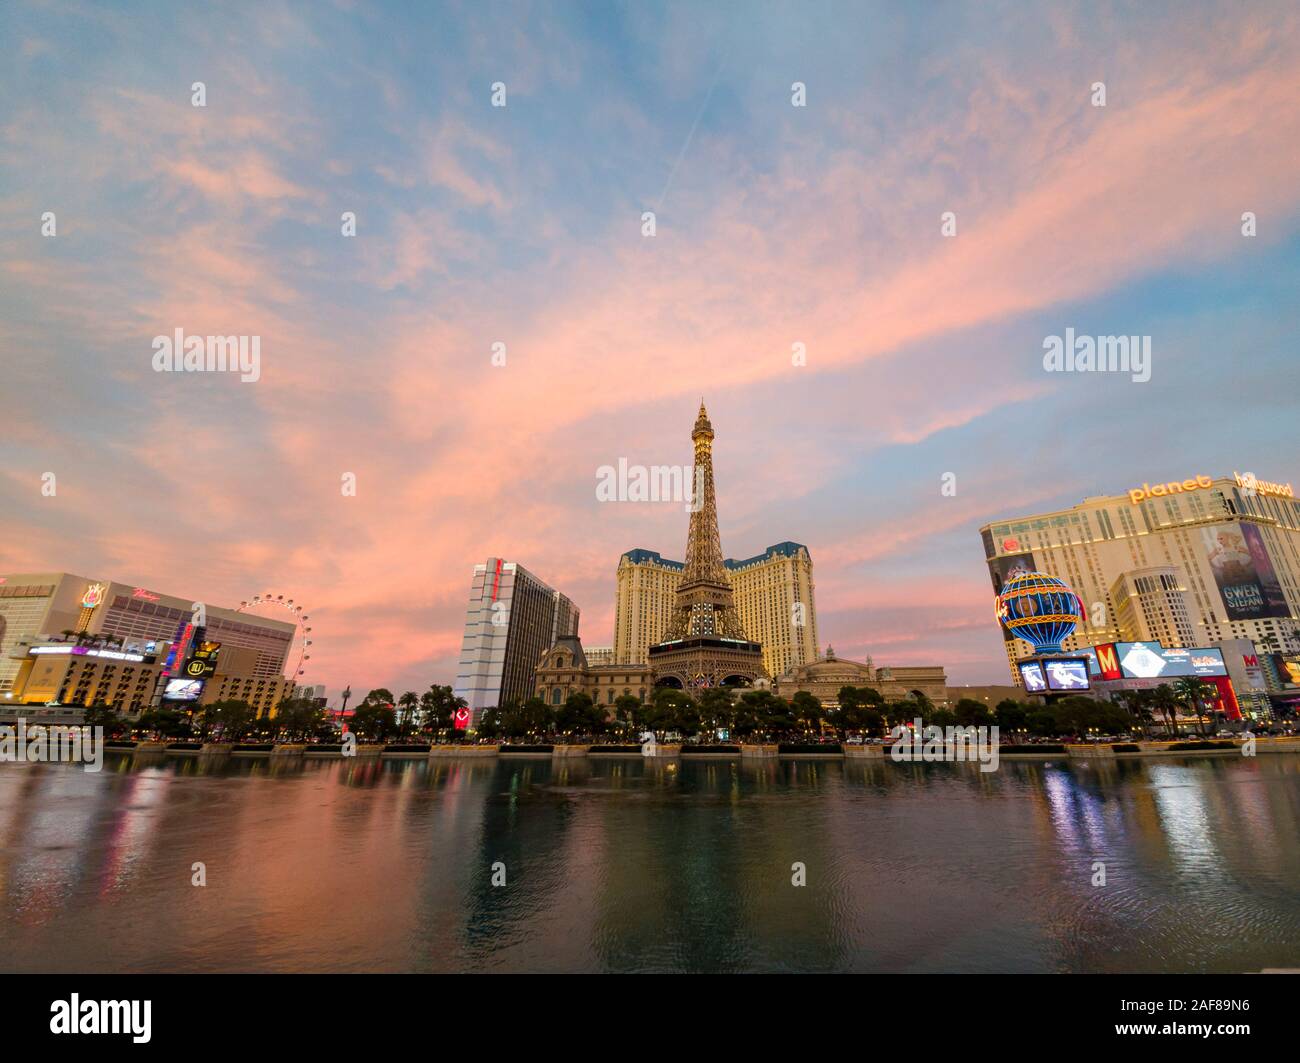 Las Vegas, SEP 25: Sonnenuntergang Blick auf Paris Casino mit Eiffelturm  und Wasser Tanz Performance am 25.September 2019 in Las Vegas, Nevada  Stockfotografie - Alamy